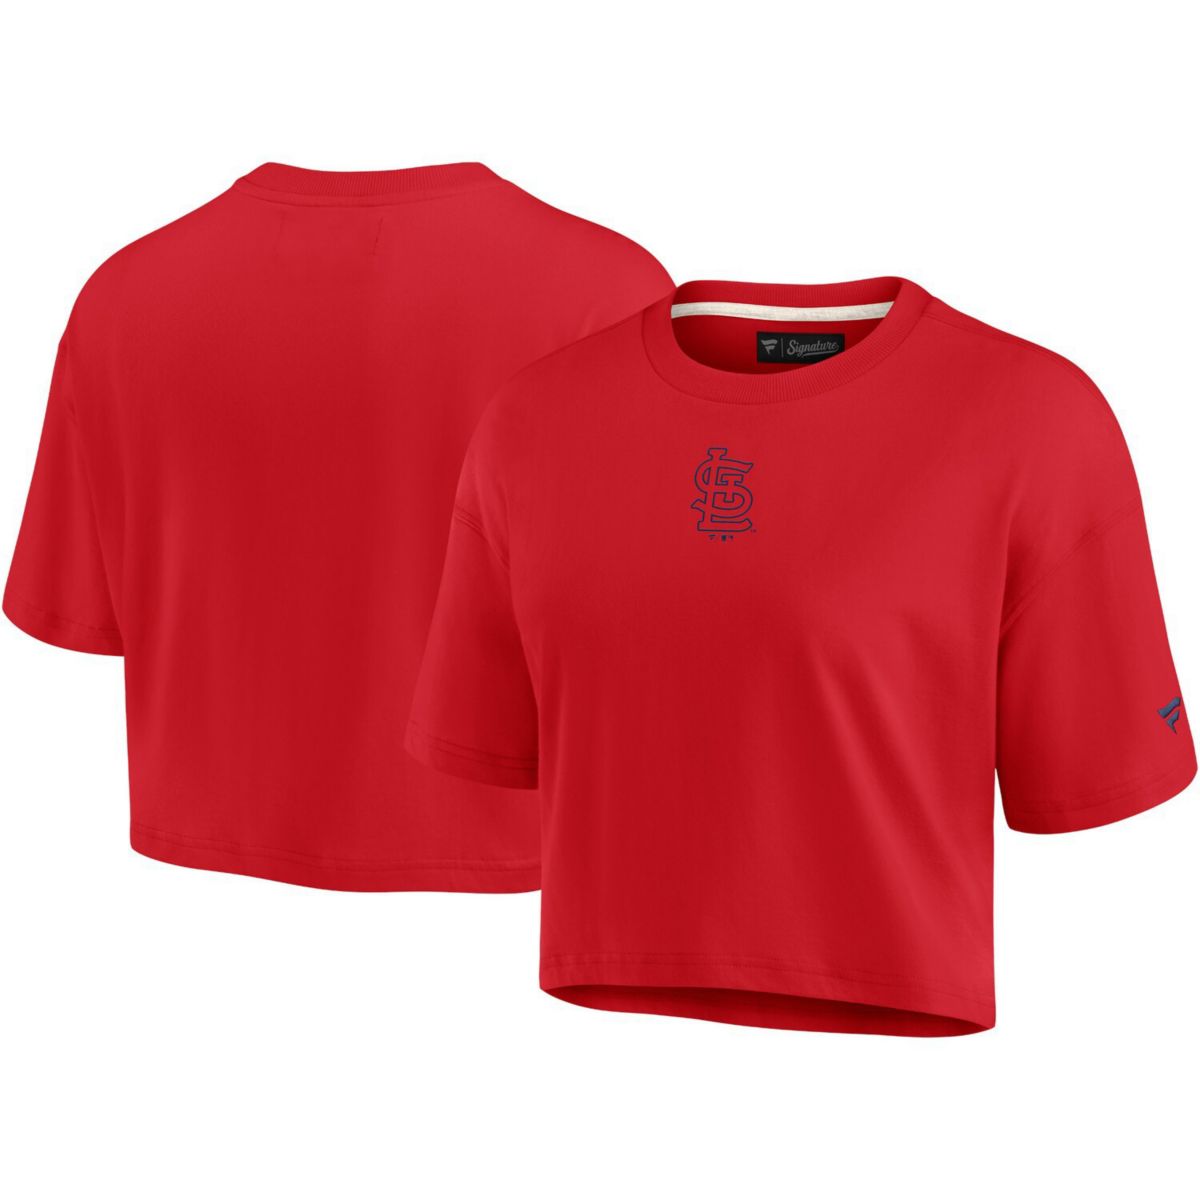 Women's Fanatics Signature Red St. Louis Cardinals Elements Super Soft Boxy Cropped T-Shirt Fanatics Signature